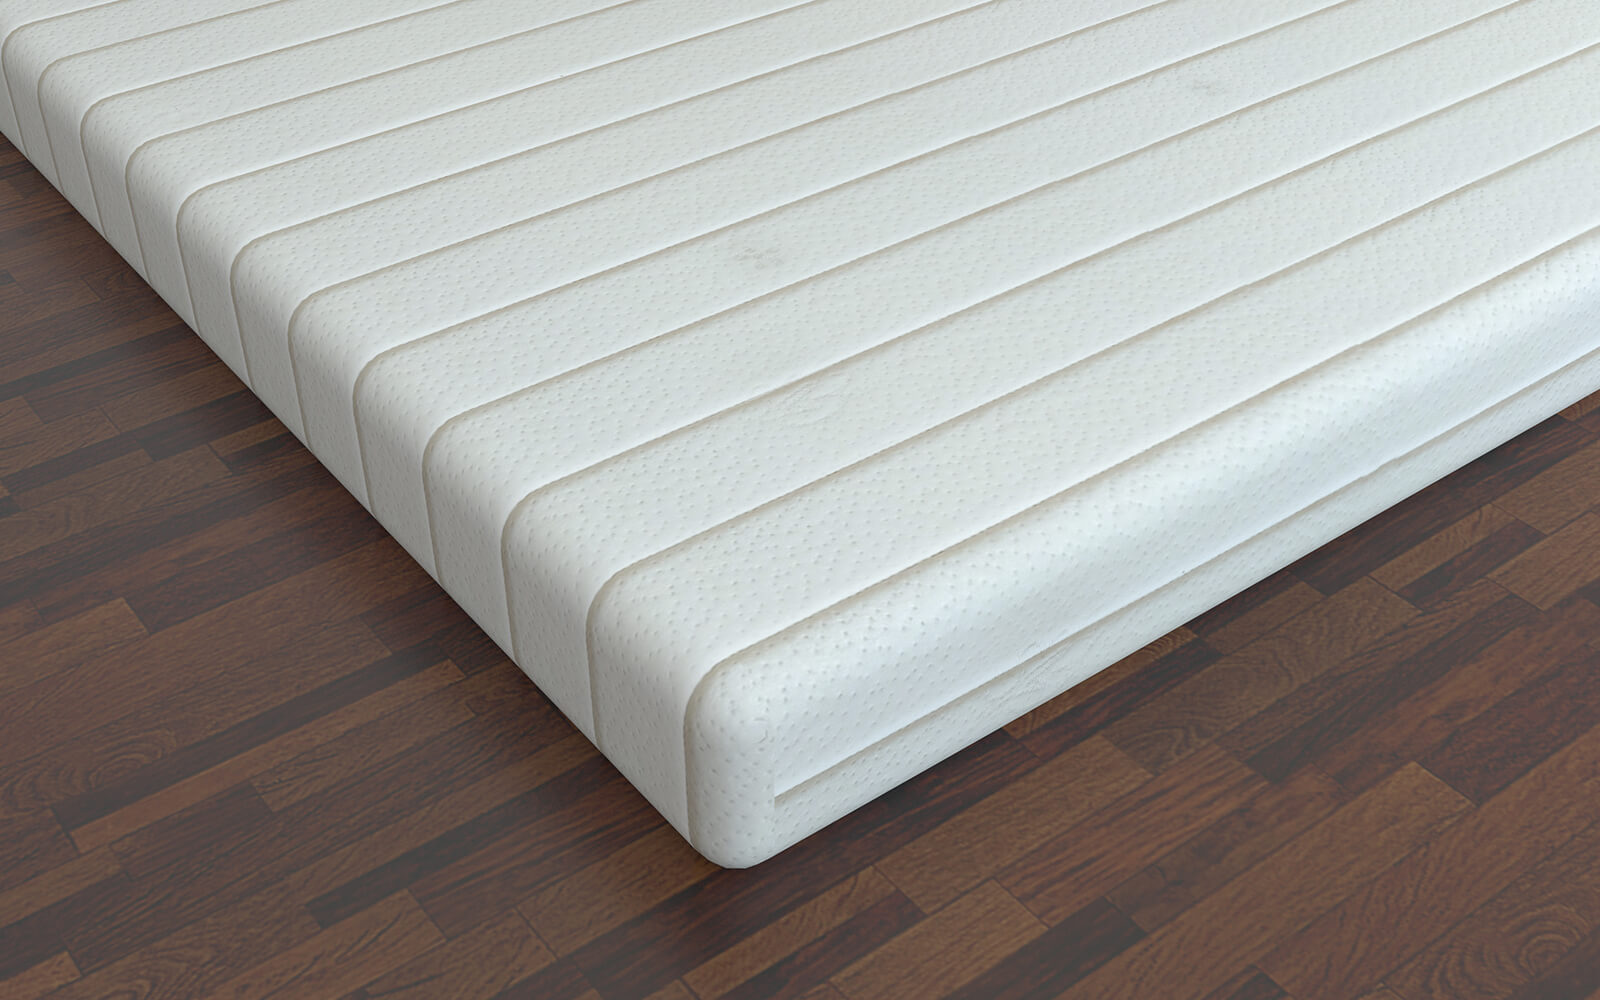 visco latex mattress for sale